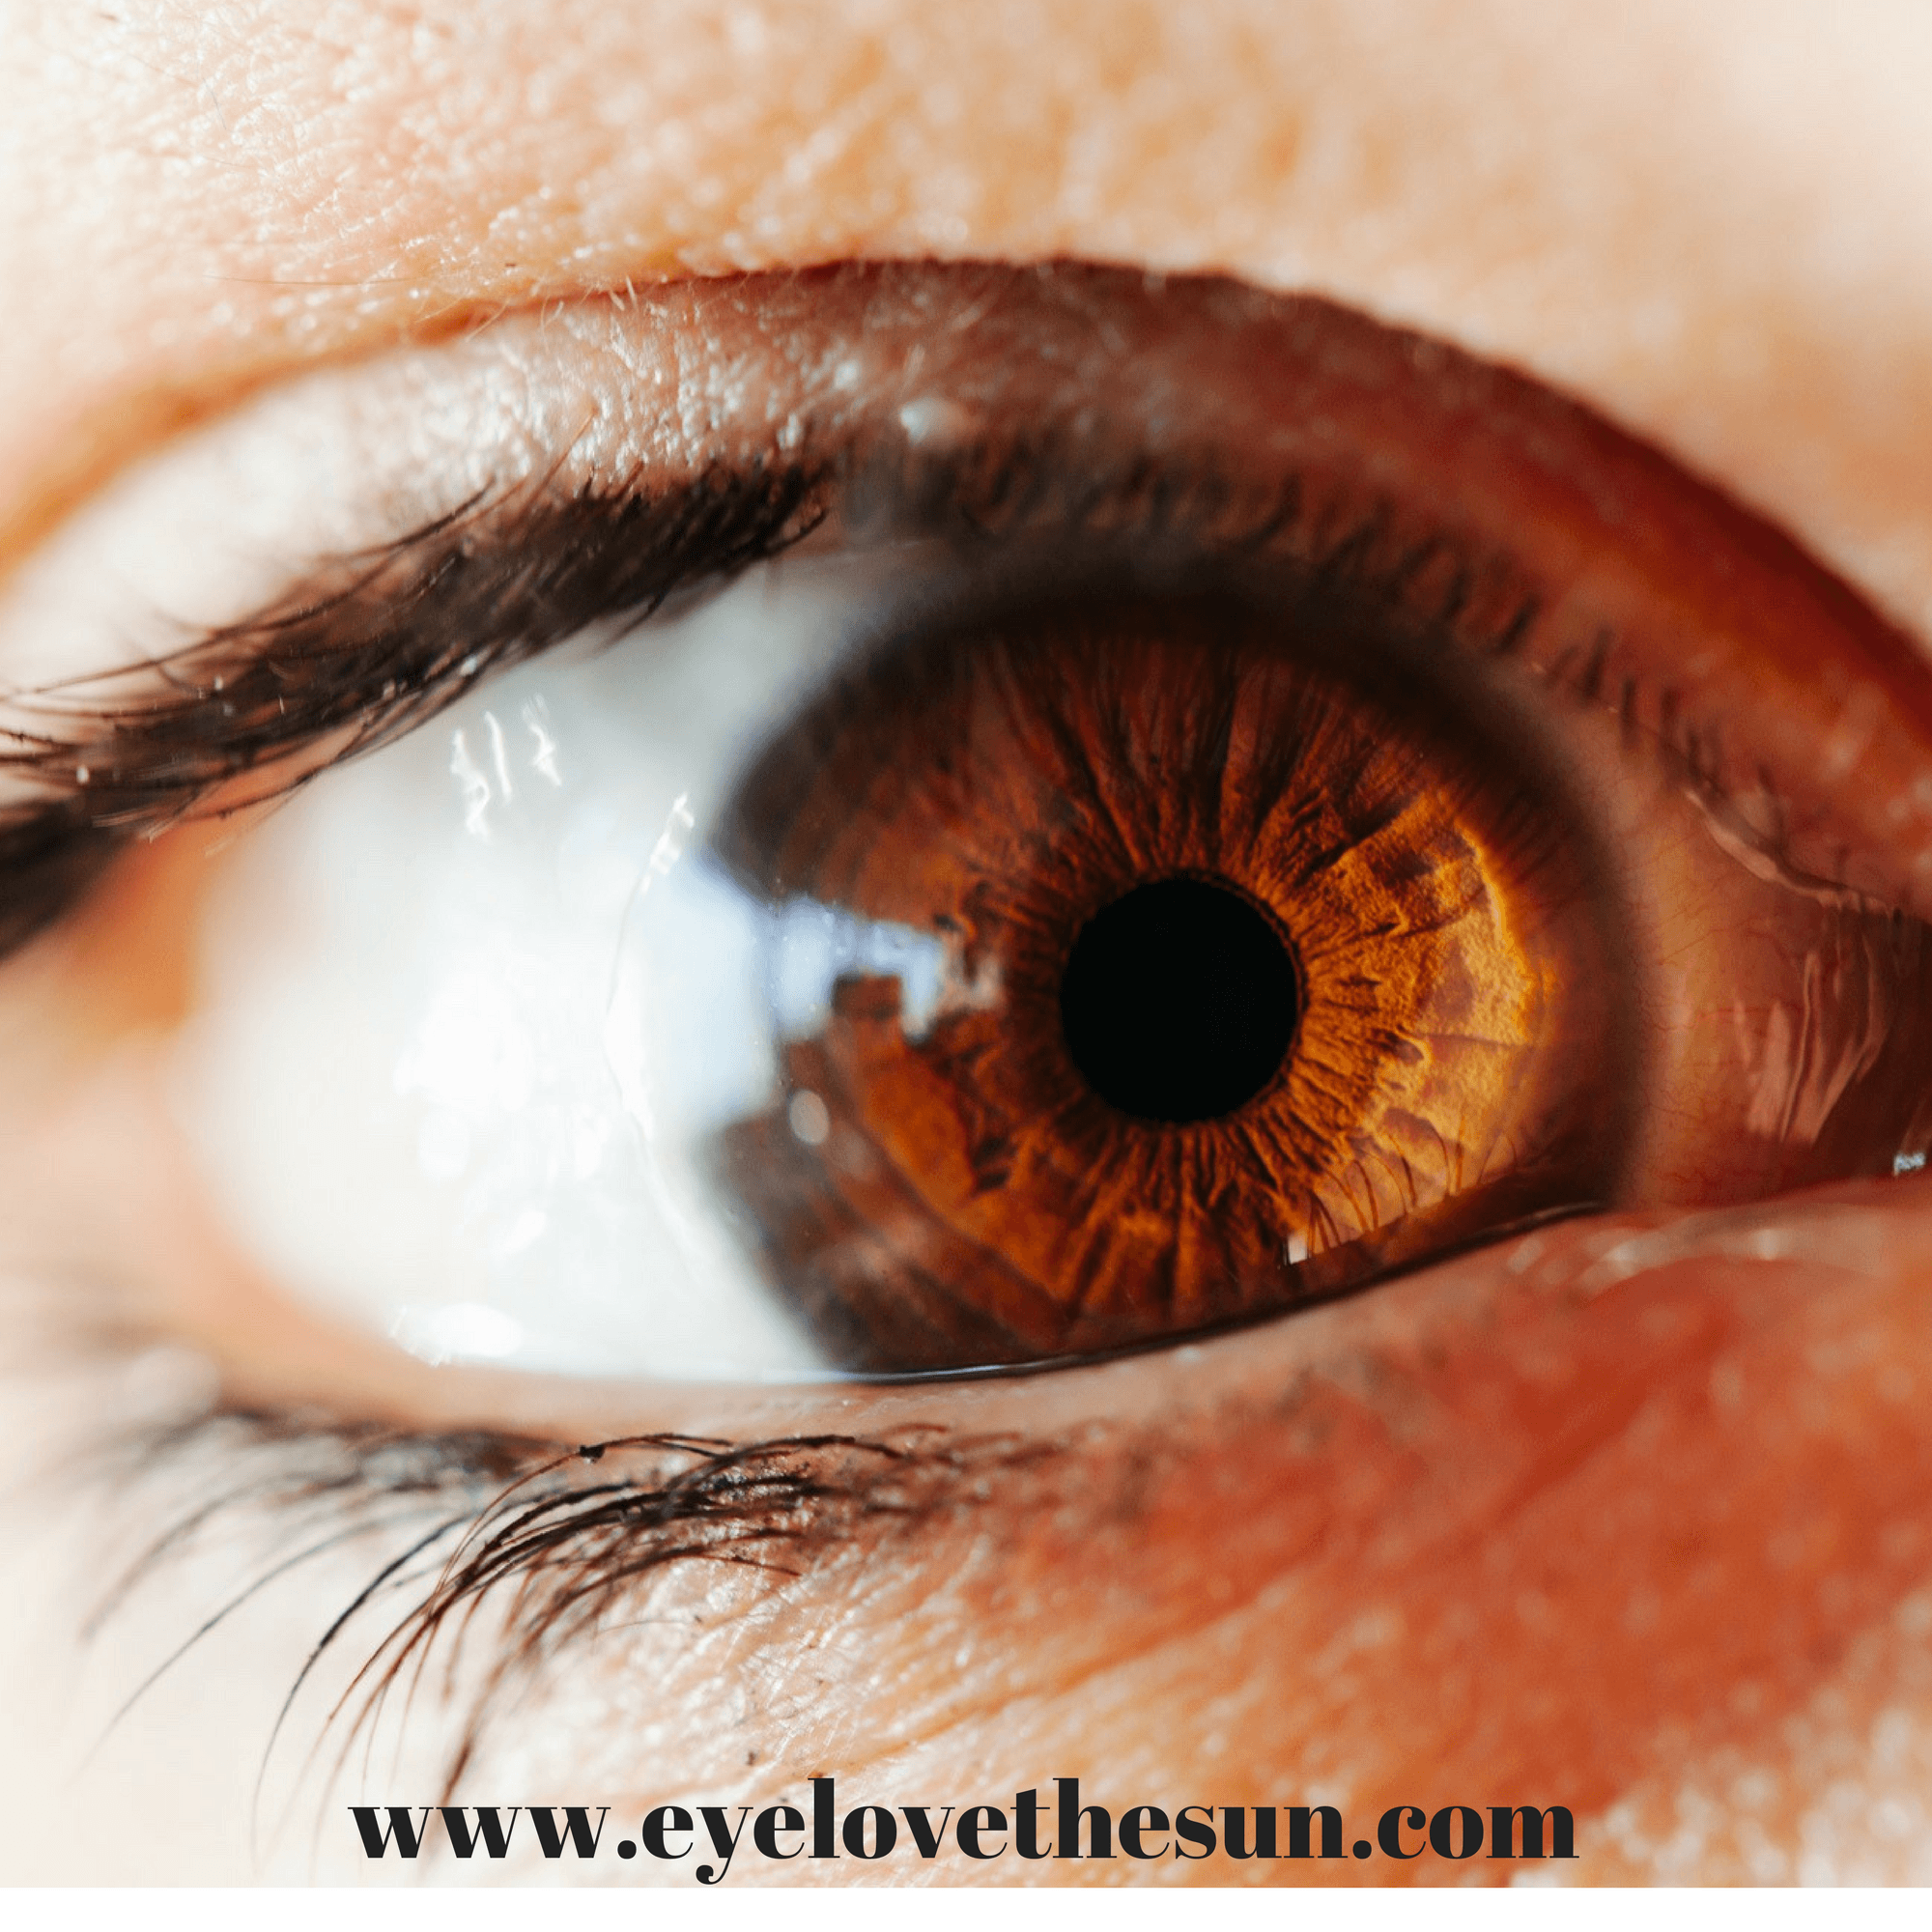 How Do You Treat Severe Dry Eye?